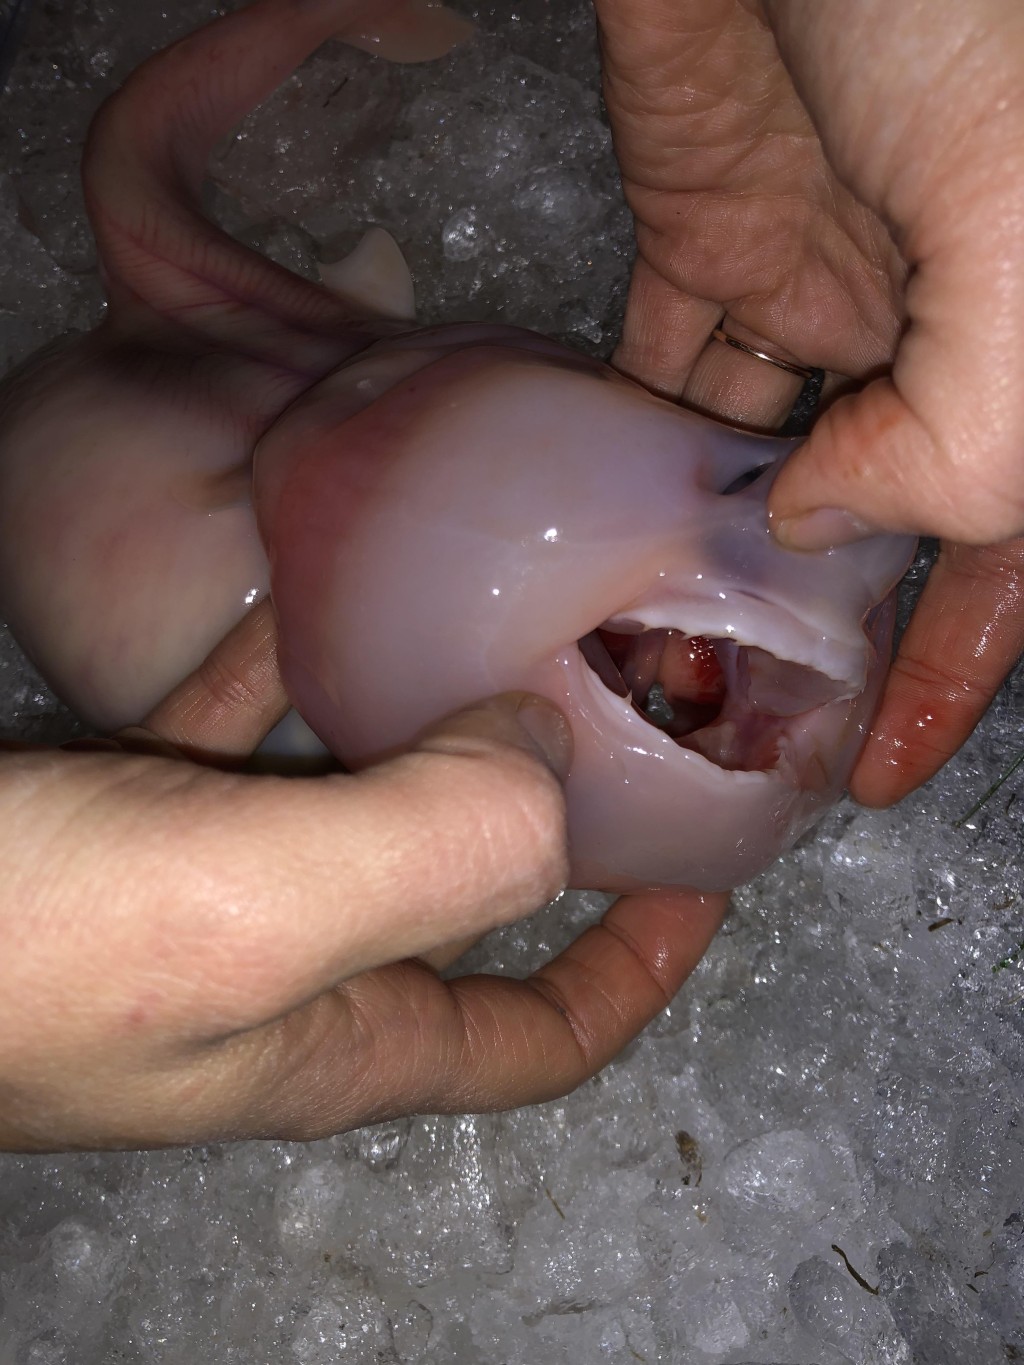 This 12 week old porbeagle shark embryo had already developed teeth